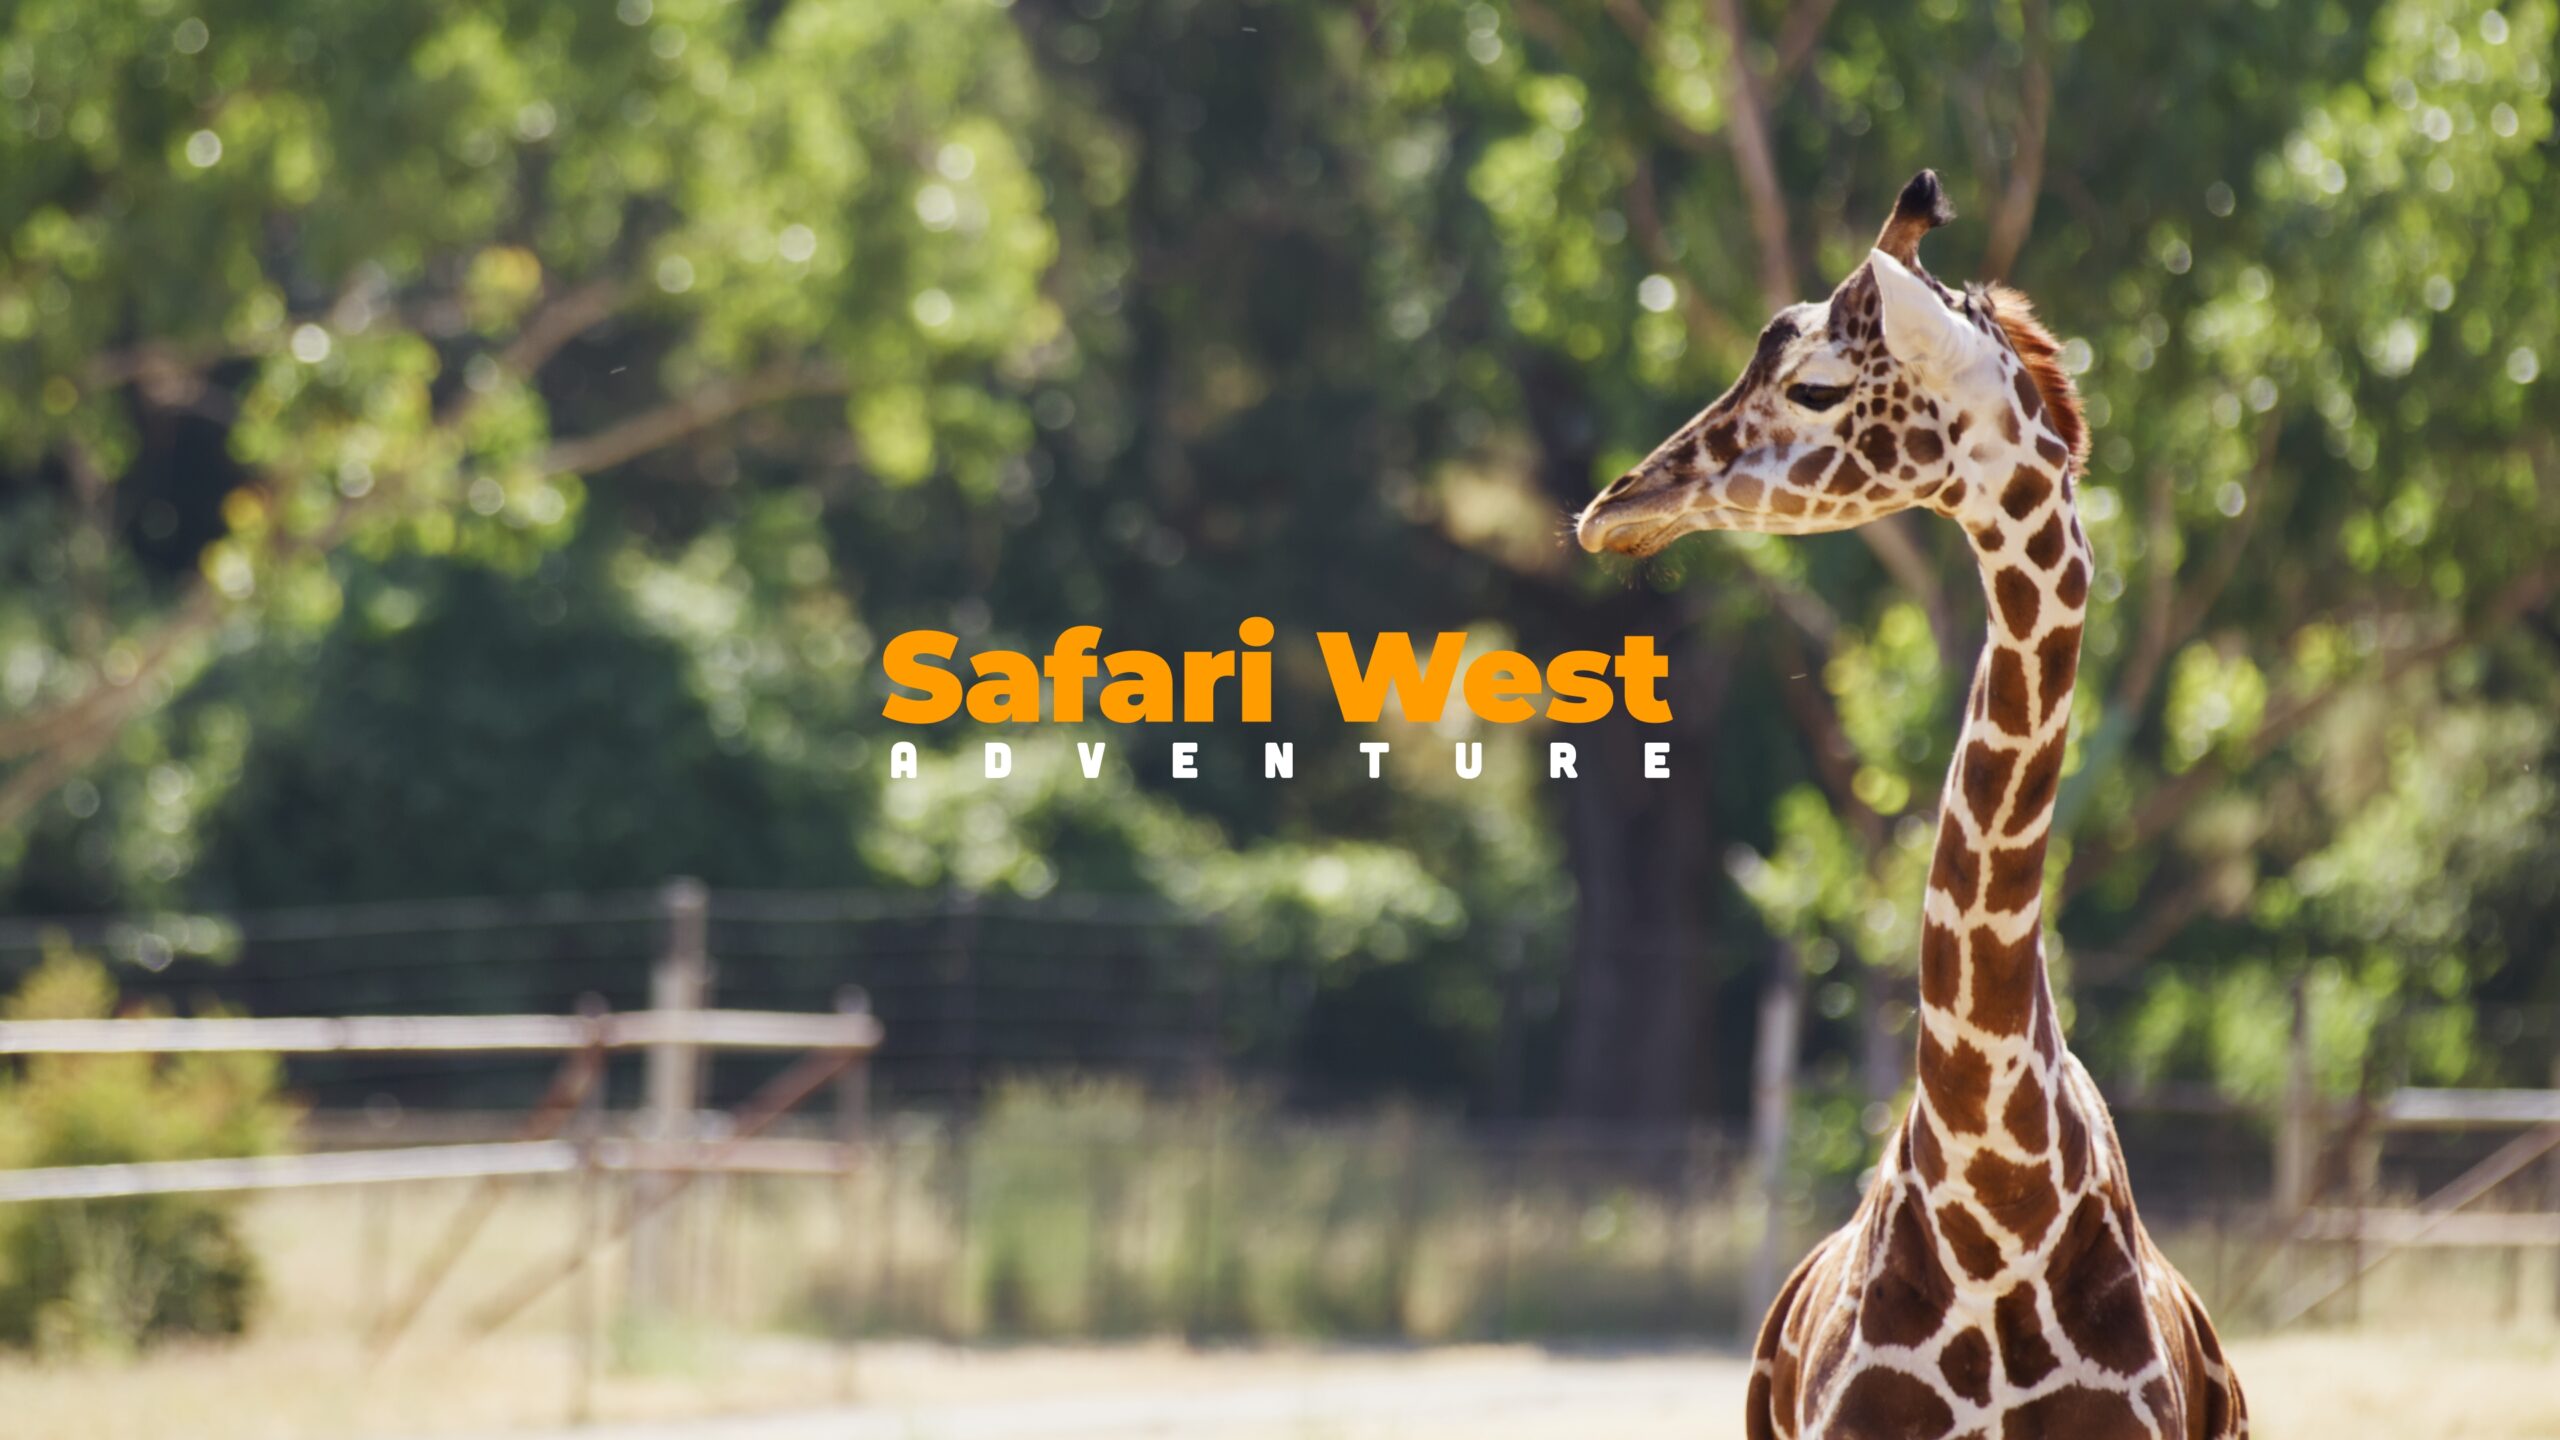 Cover photo for Safari West Adventure